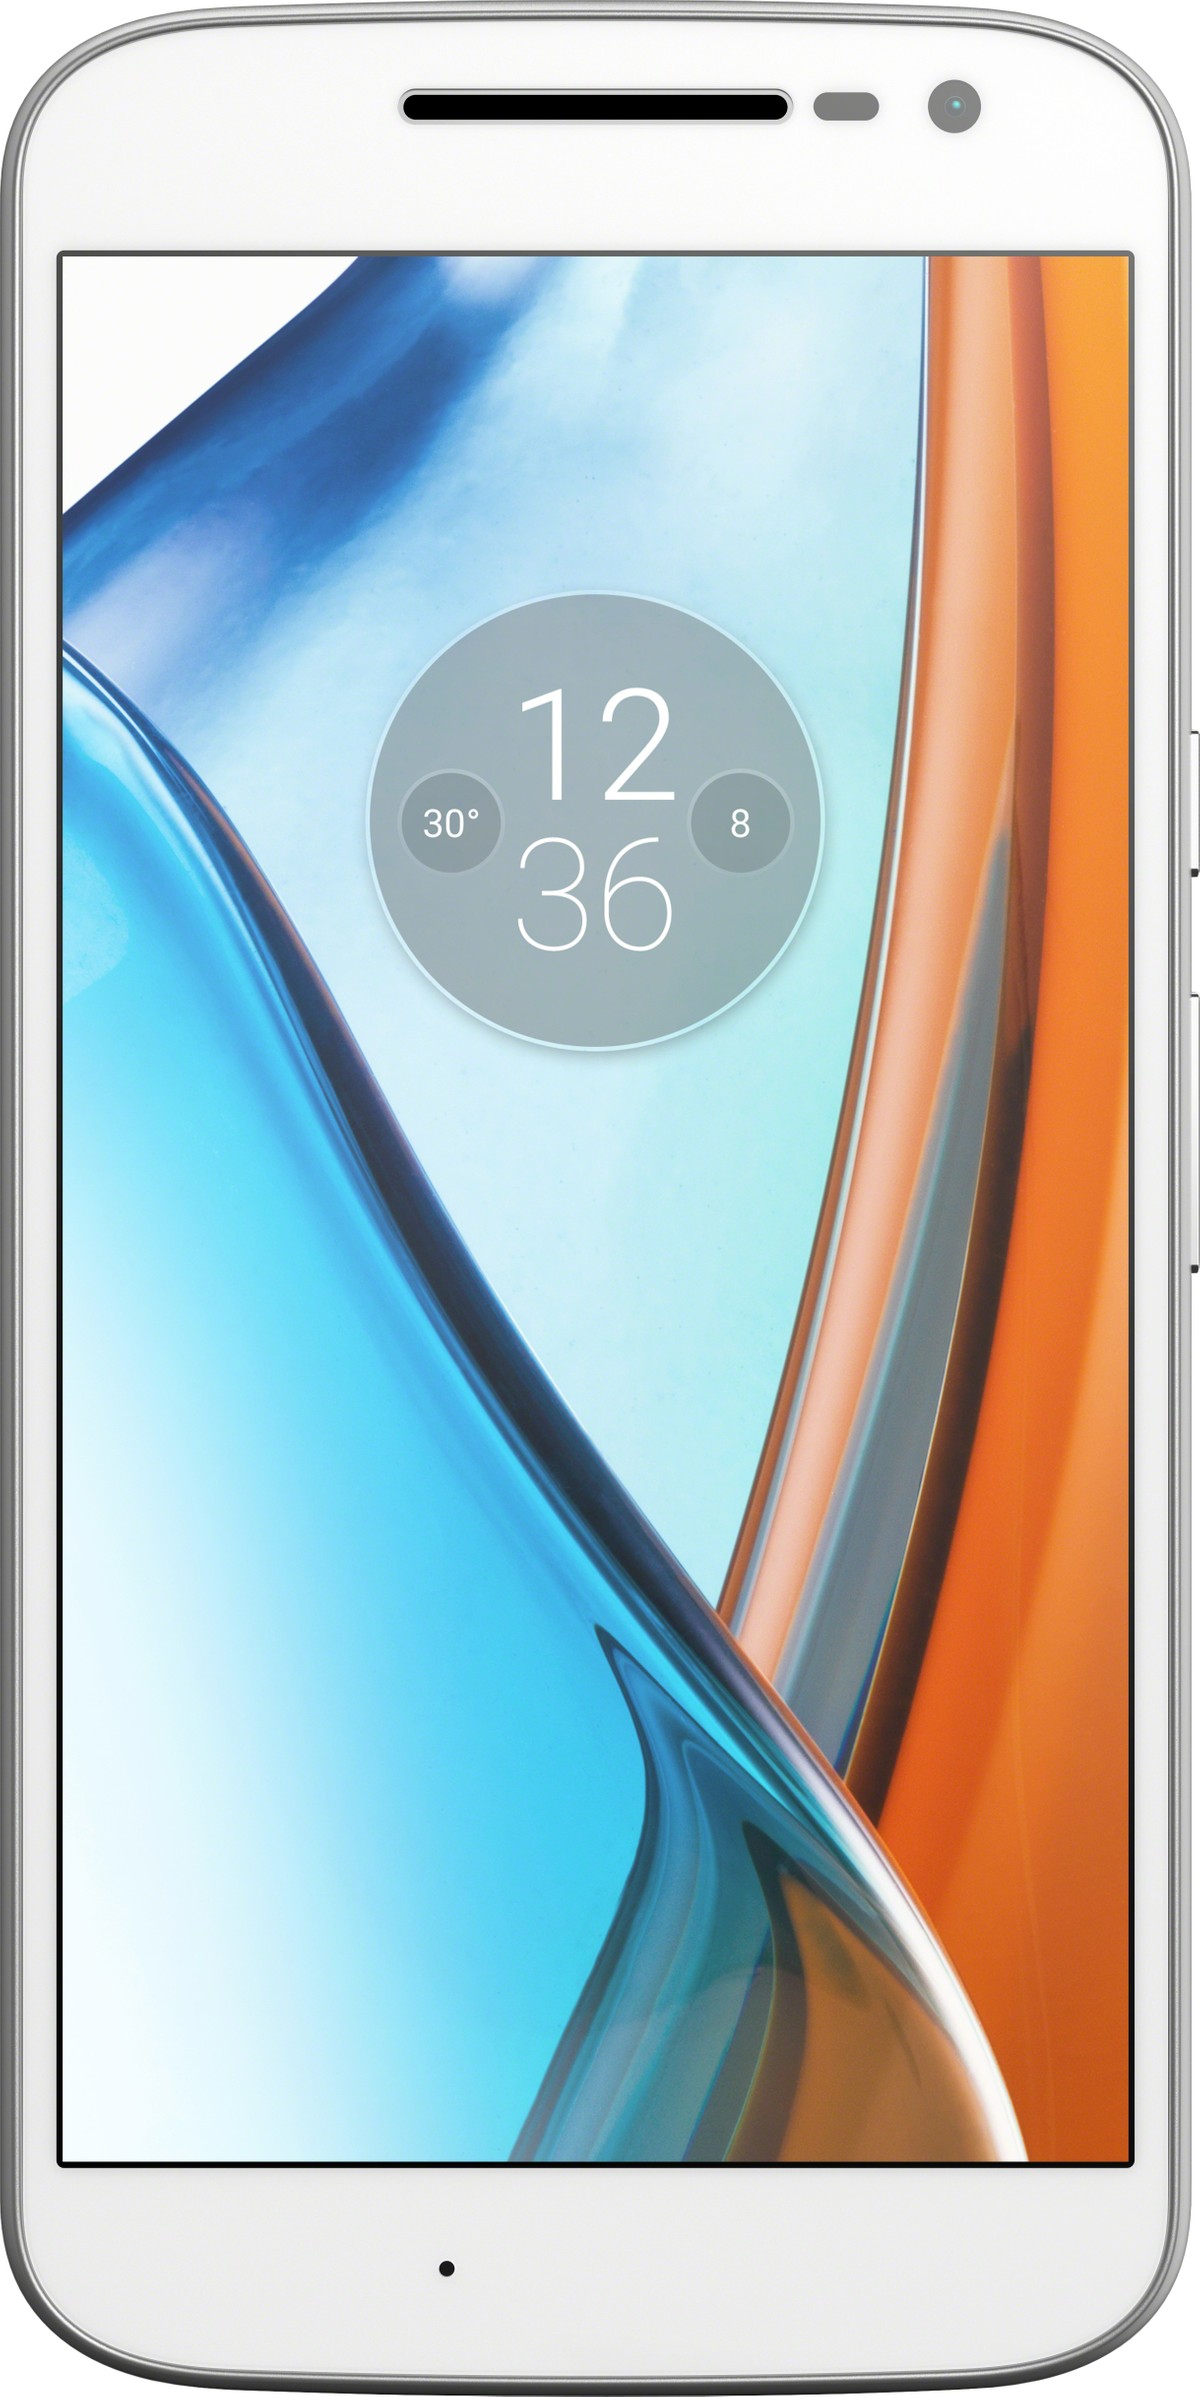 Motorola Moto G4 Play 16GB Preto